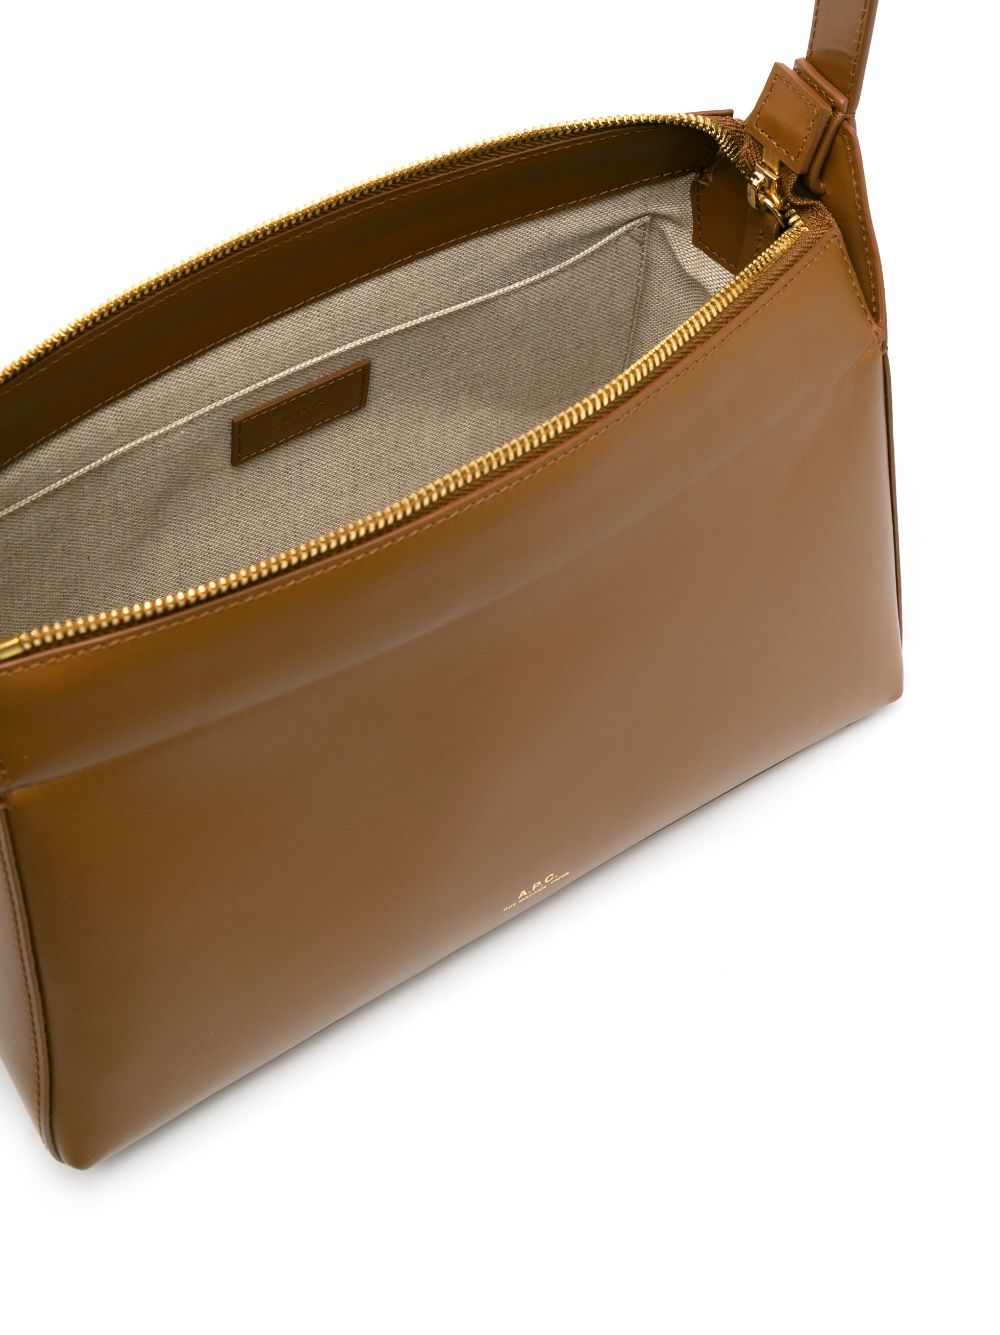 A.P.C Virginie Leather Shoulder Bag - Brown